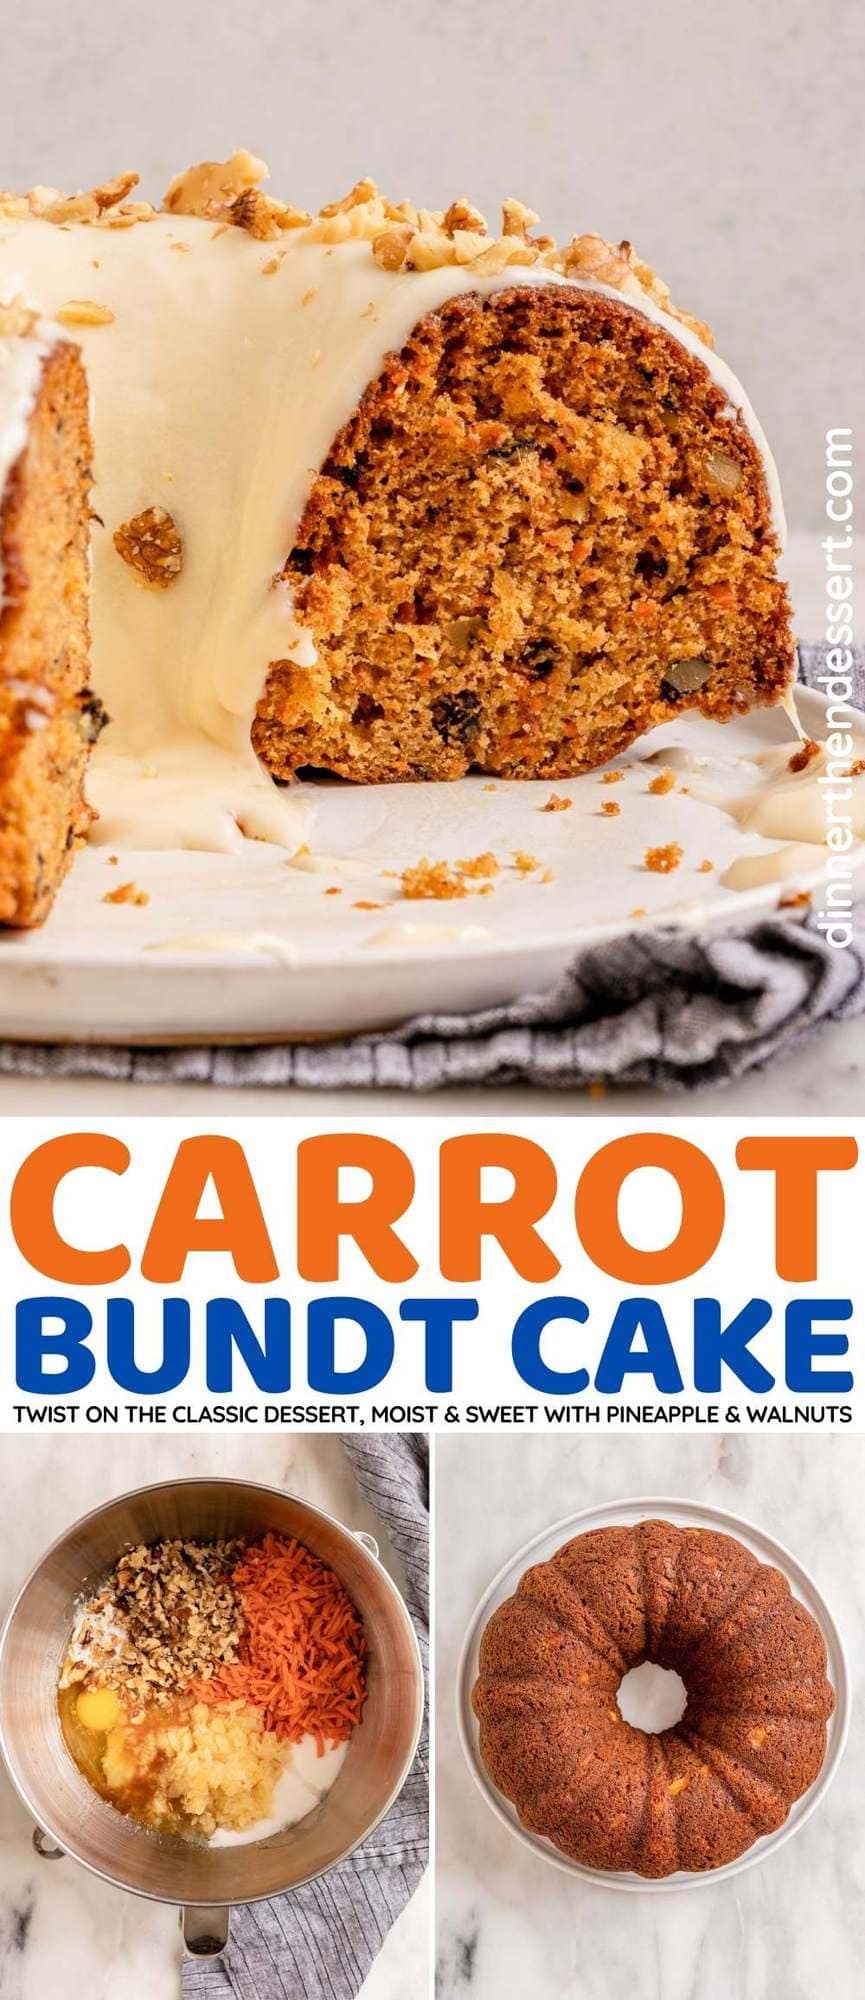 Carrot Bundt Cake collage